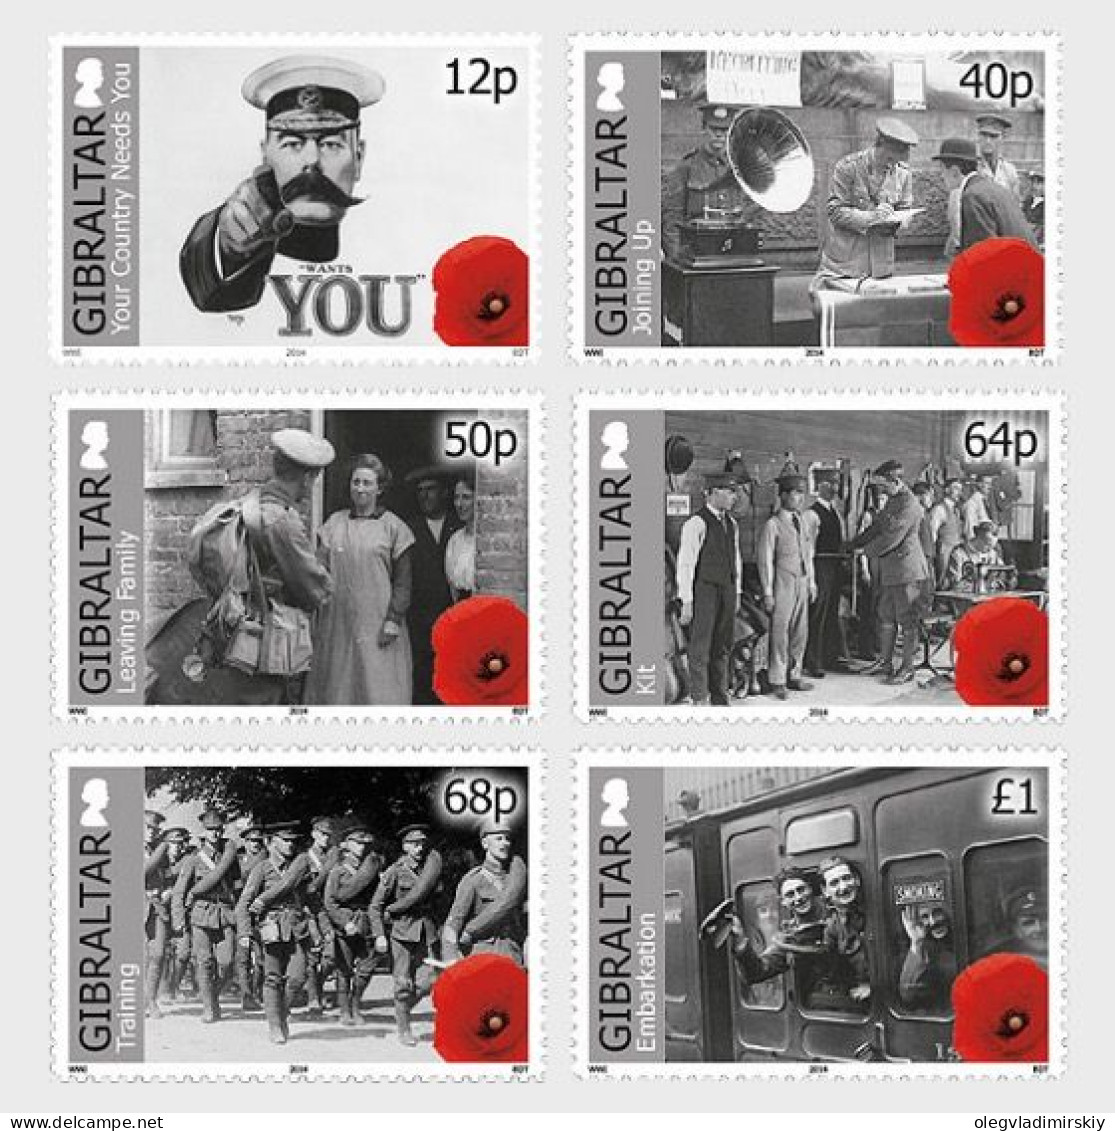 Gibraltar 2014 WWI 100 Ann Set Of 6 Stamps MNH - WW1